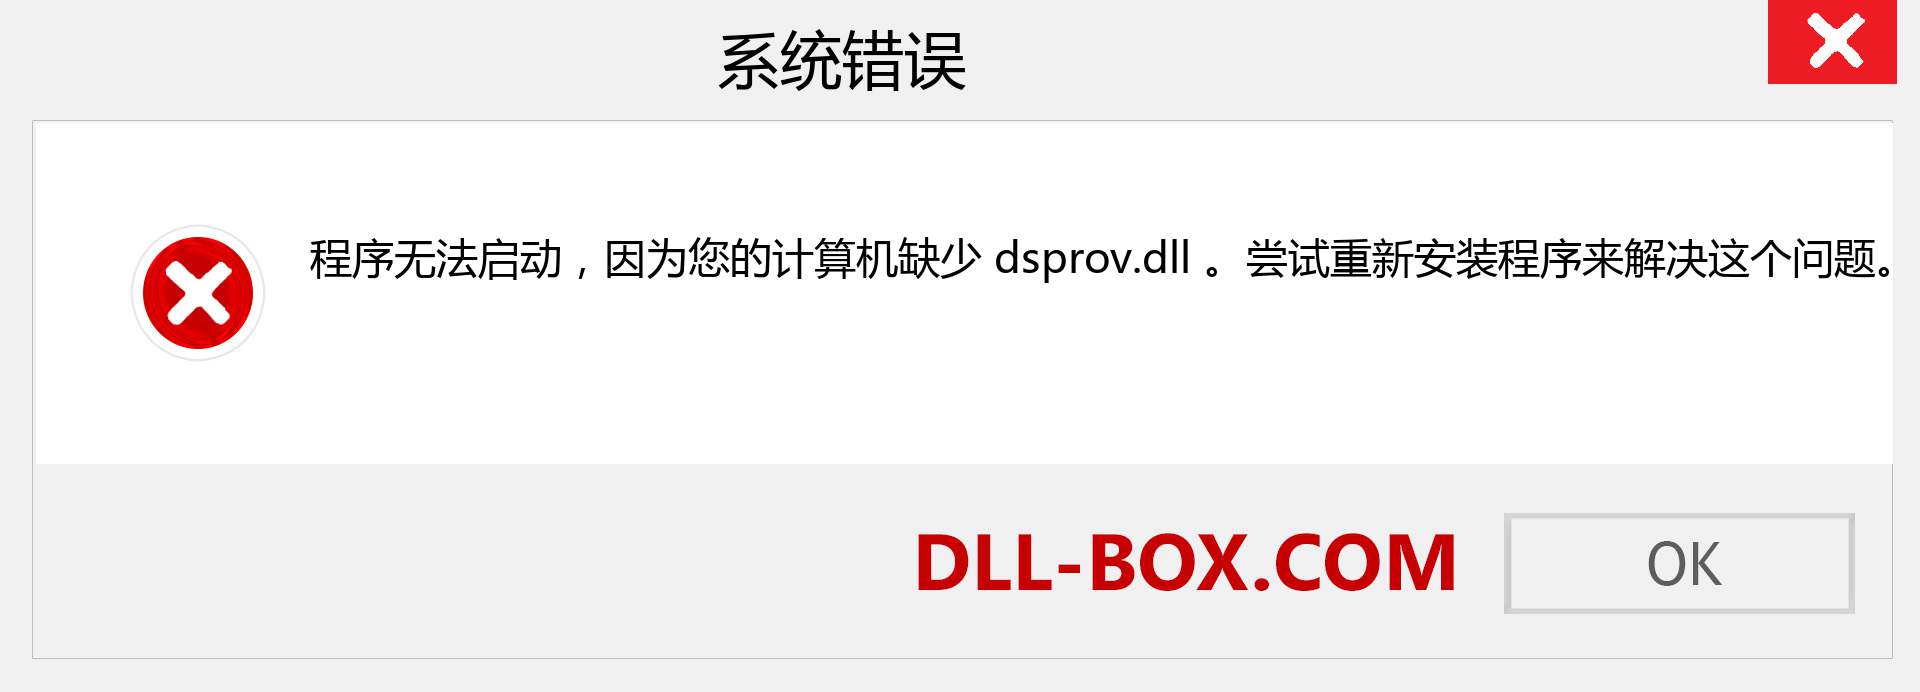 dsprov.dll 文件丢失？。 适用于 Windows 7、8、10 的下载 - 修复 Windows、照片、图像上的 dsprov dll 丢失错误